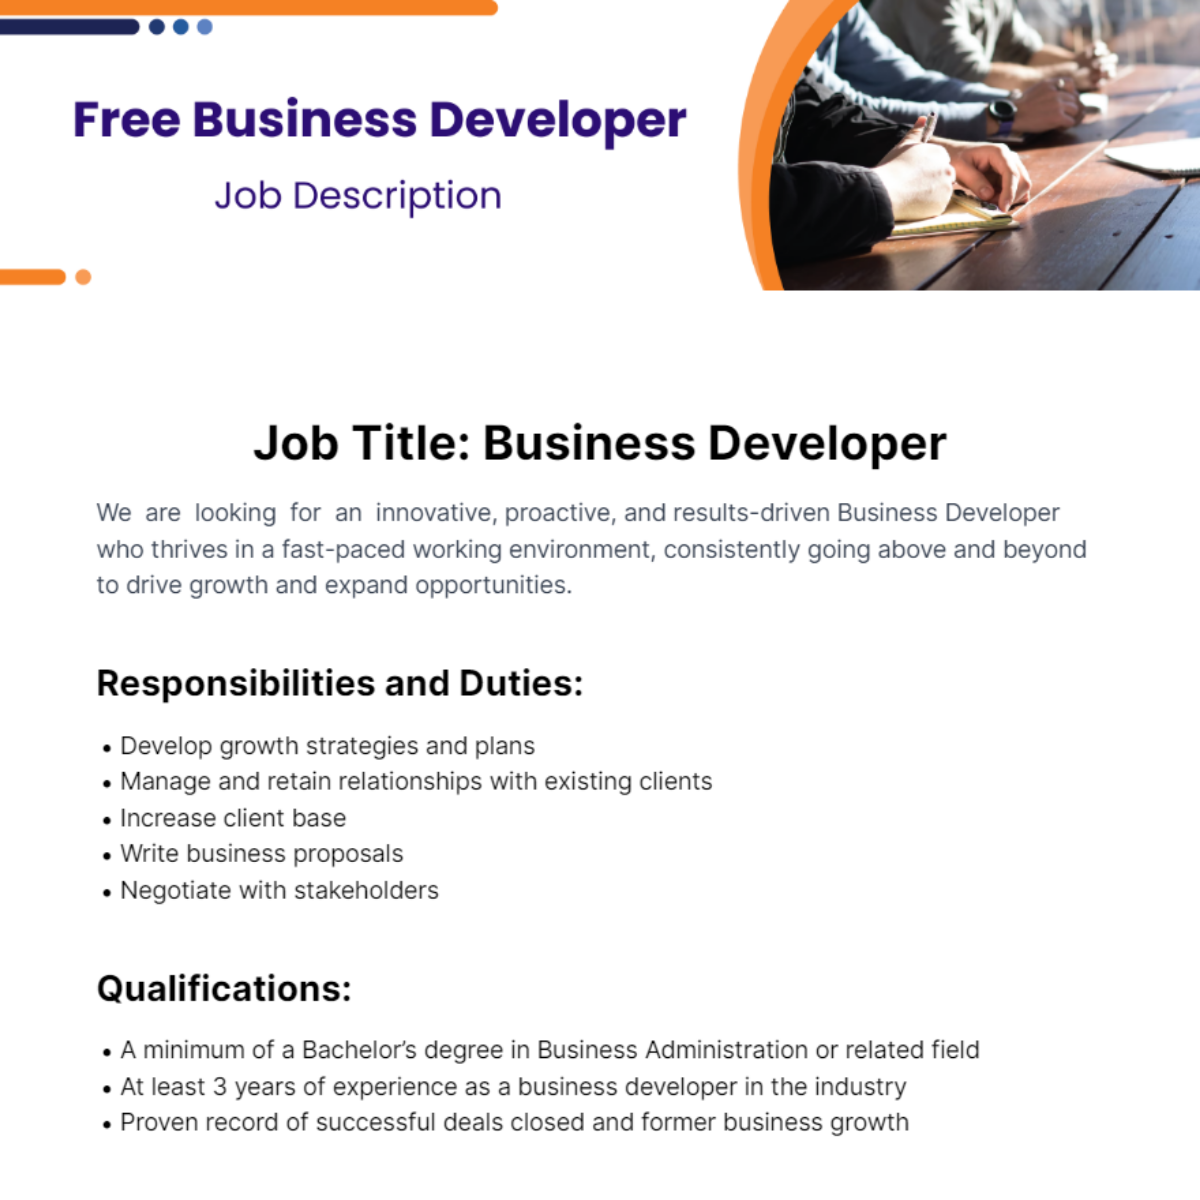 Free Business Developer Job Description Template